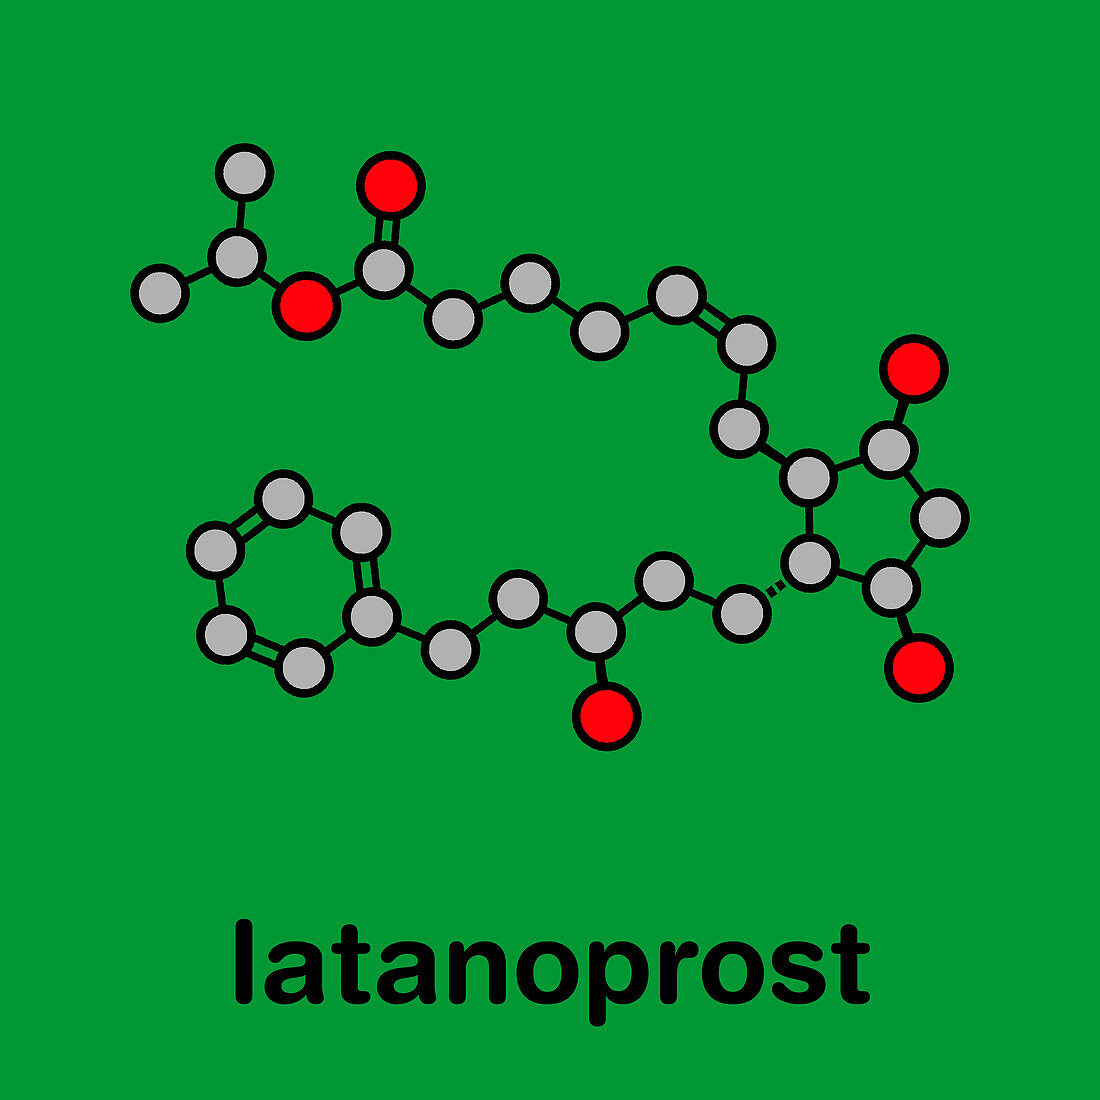 Latanoprost glaucoma drug, molecular model